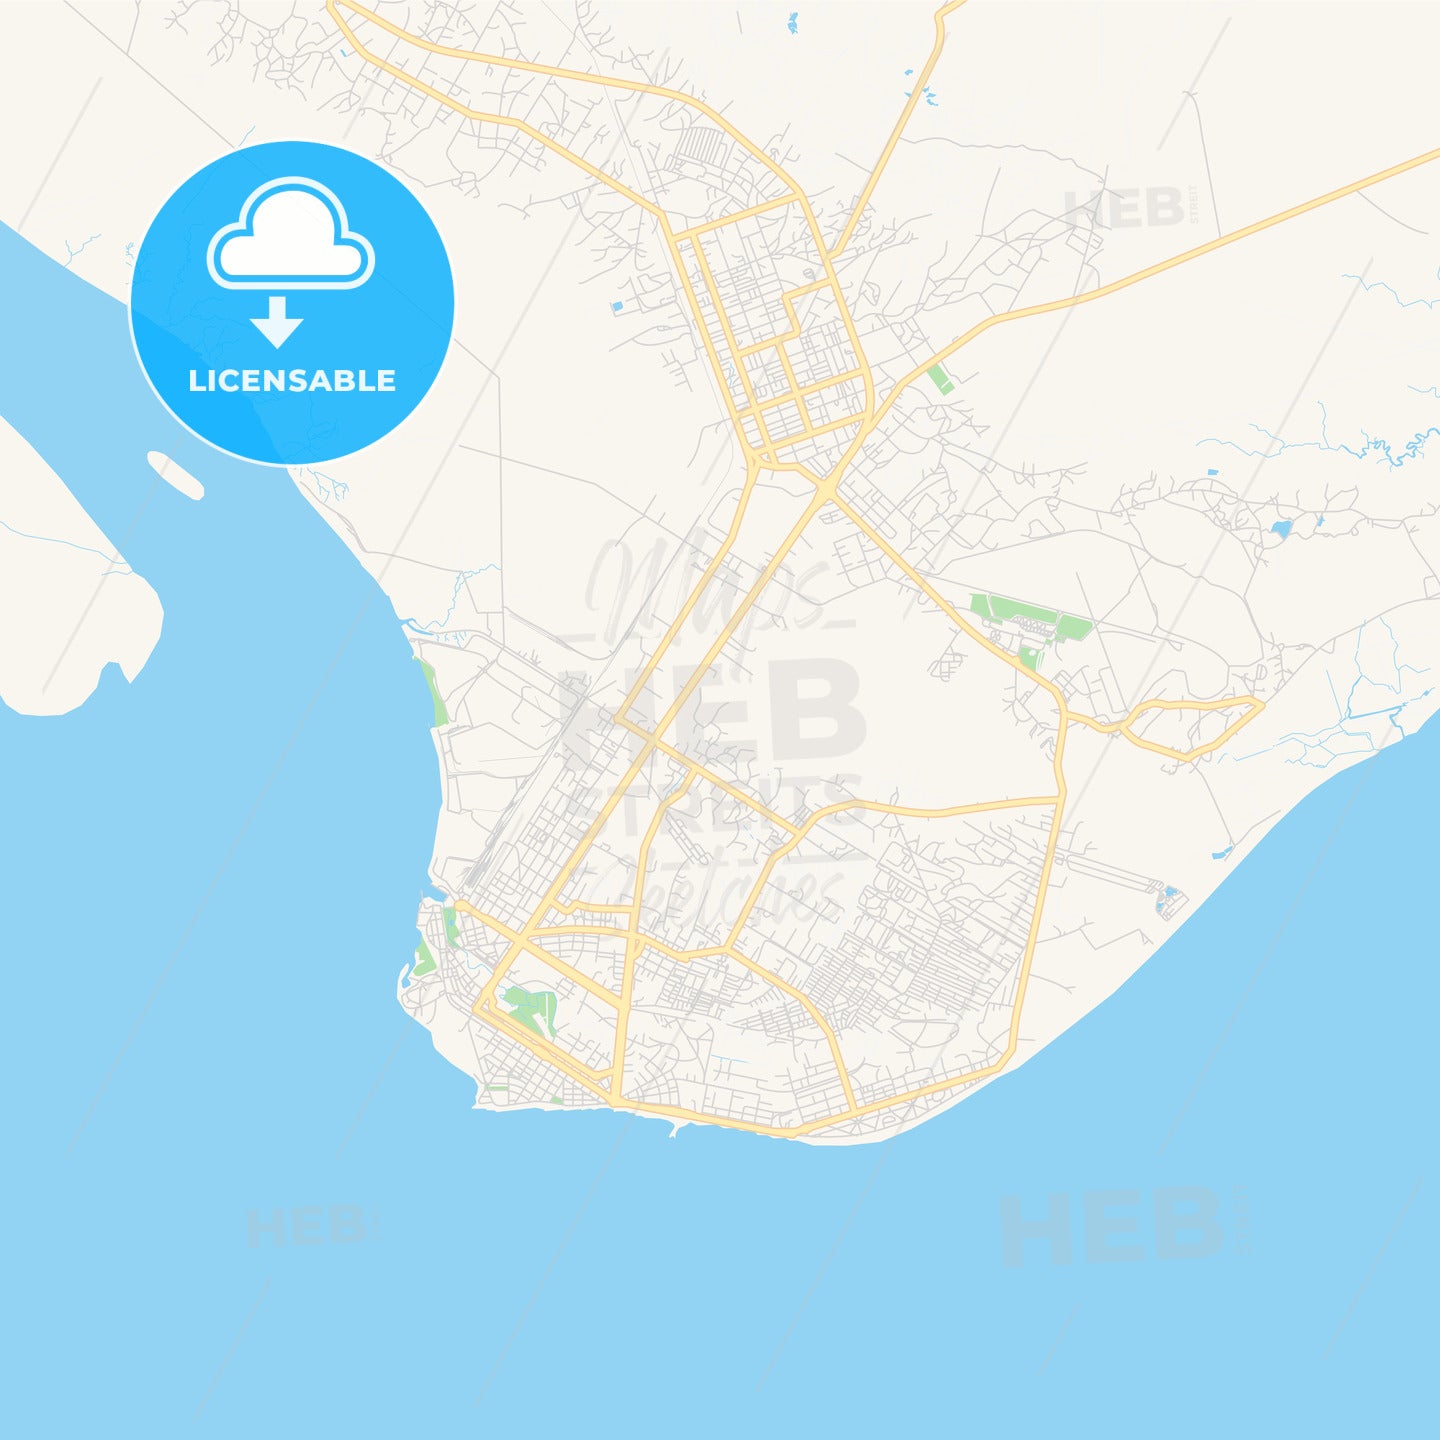 Printable street map of Beira, Mozambique